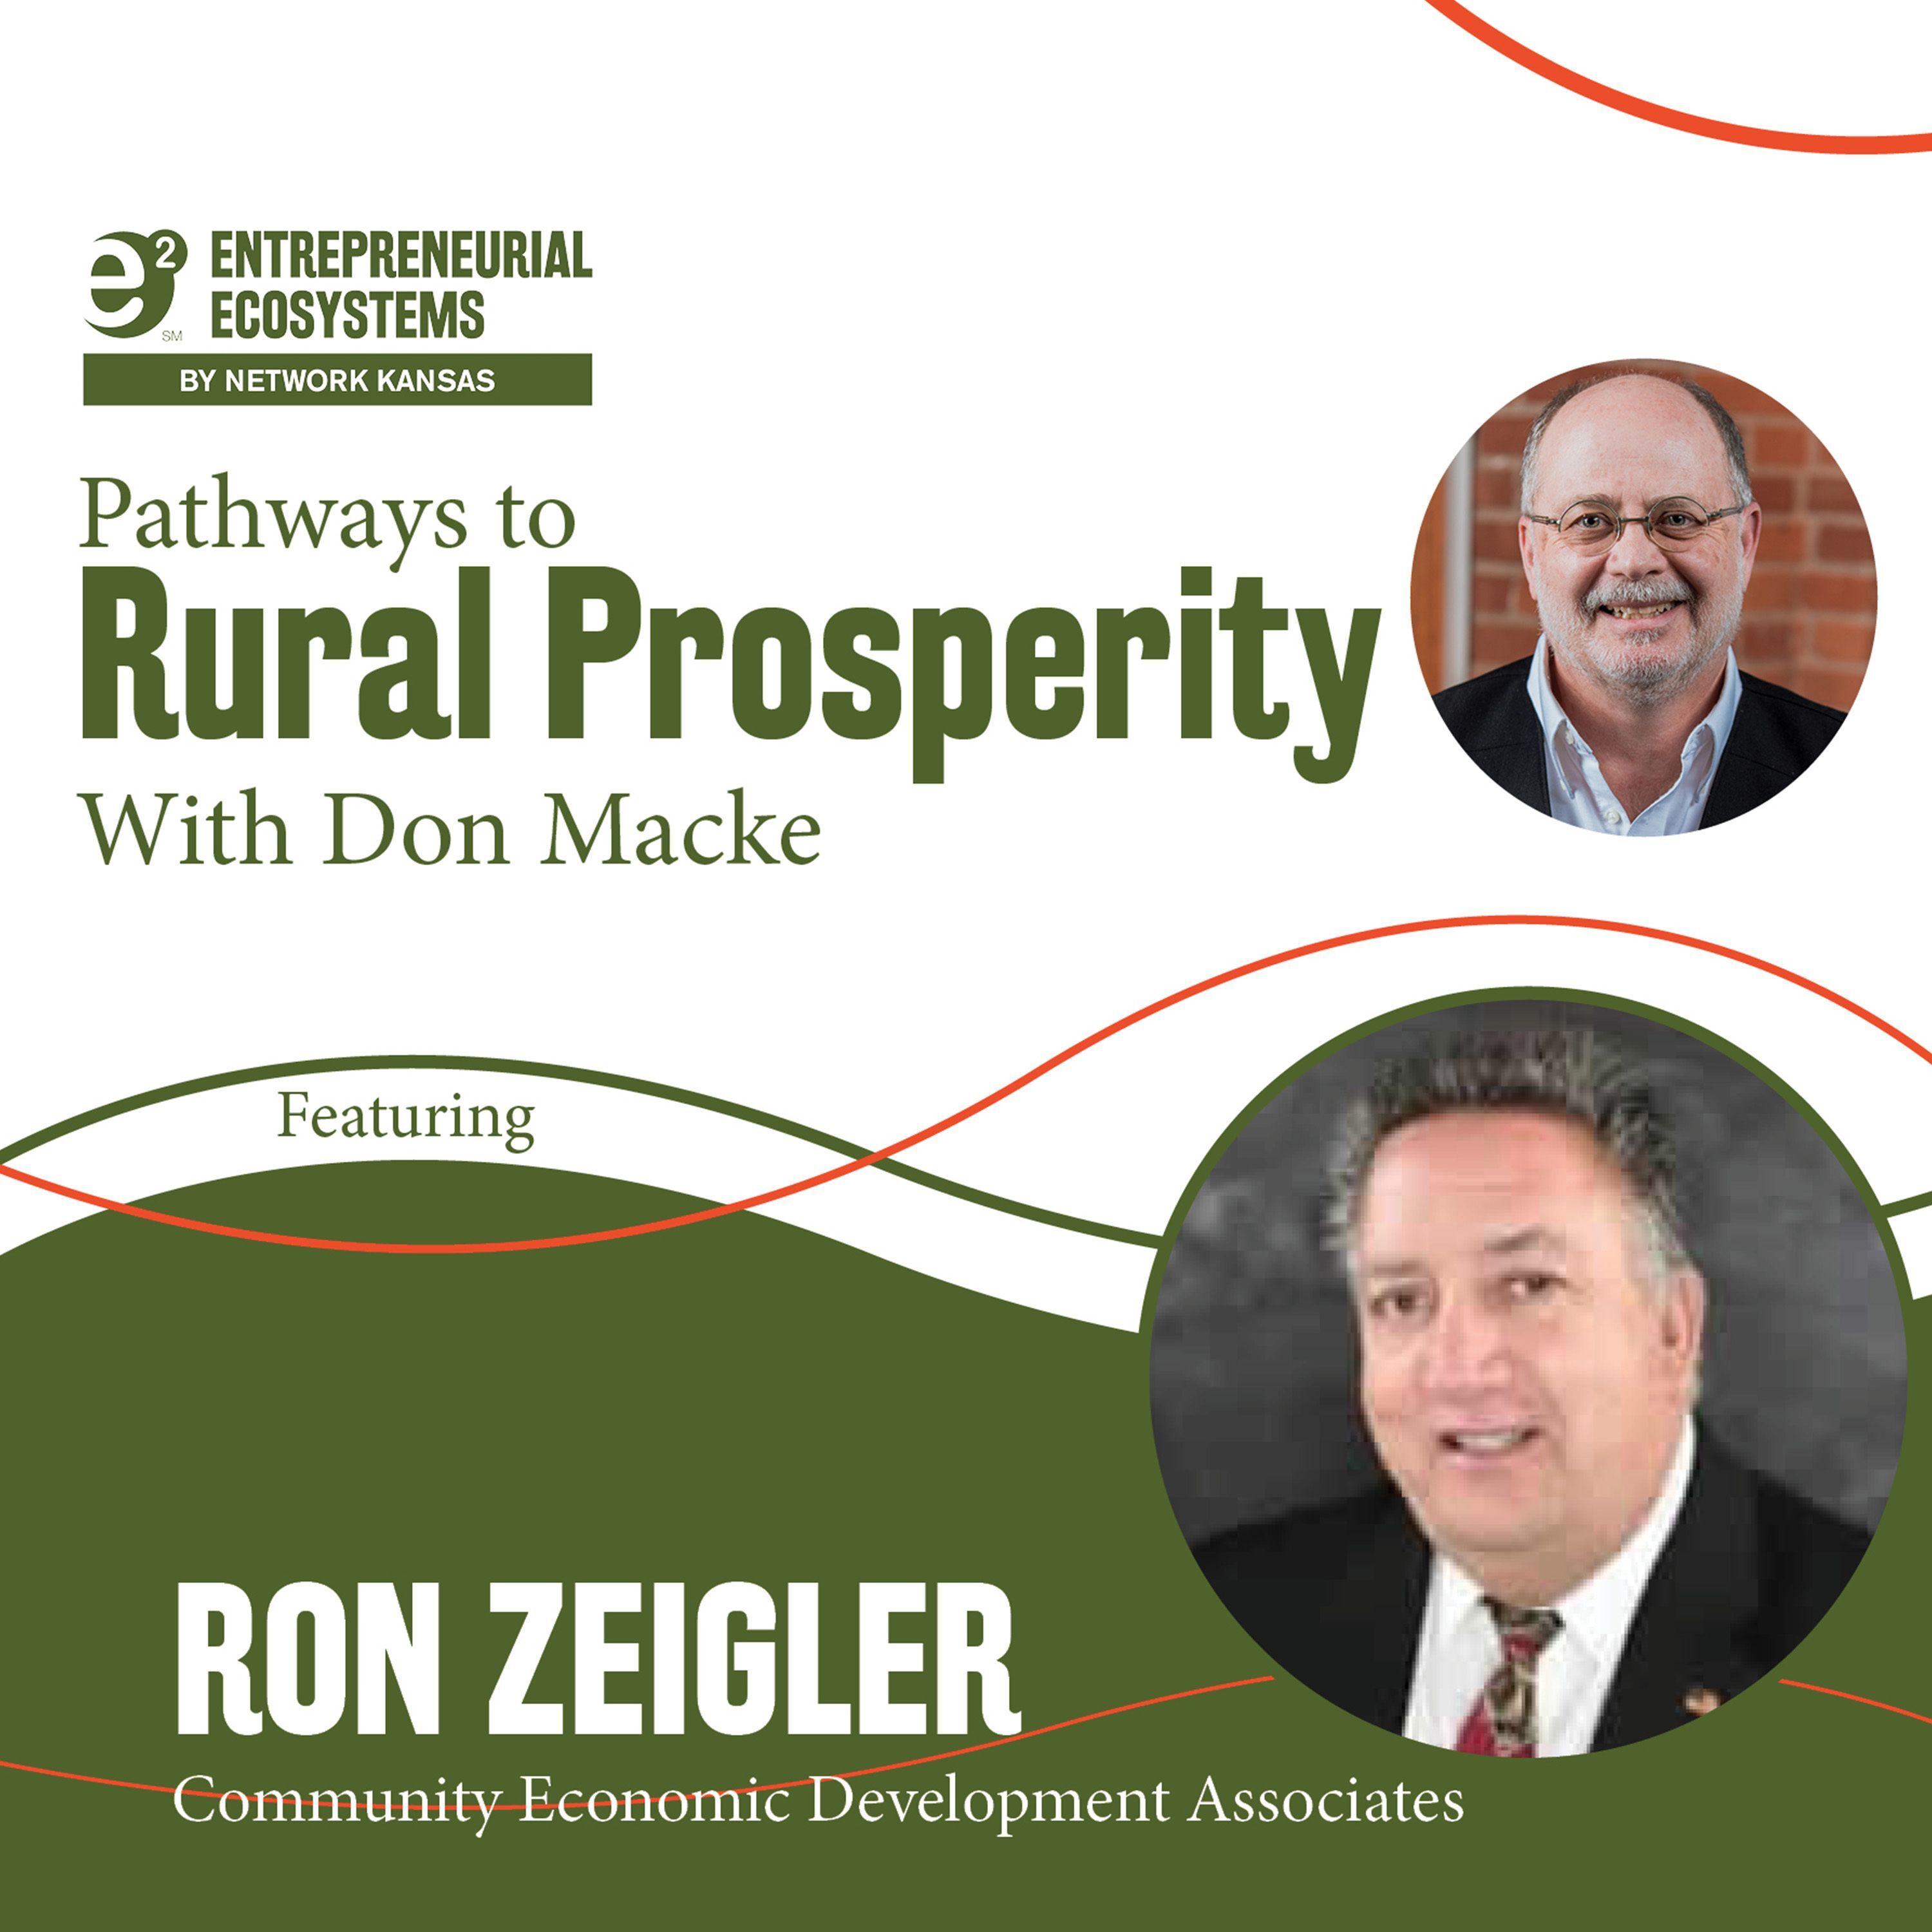 Ron Zeigler CEDA – Community Economic Development Associates